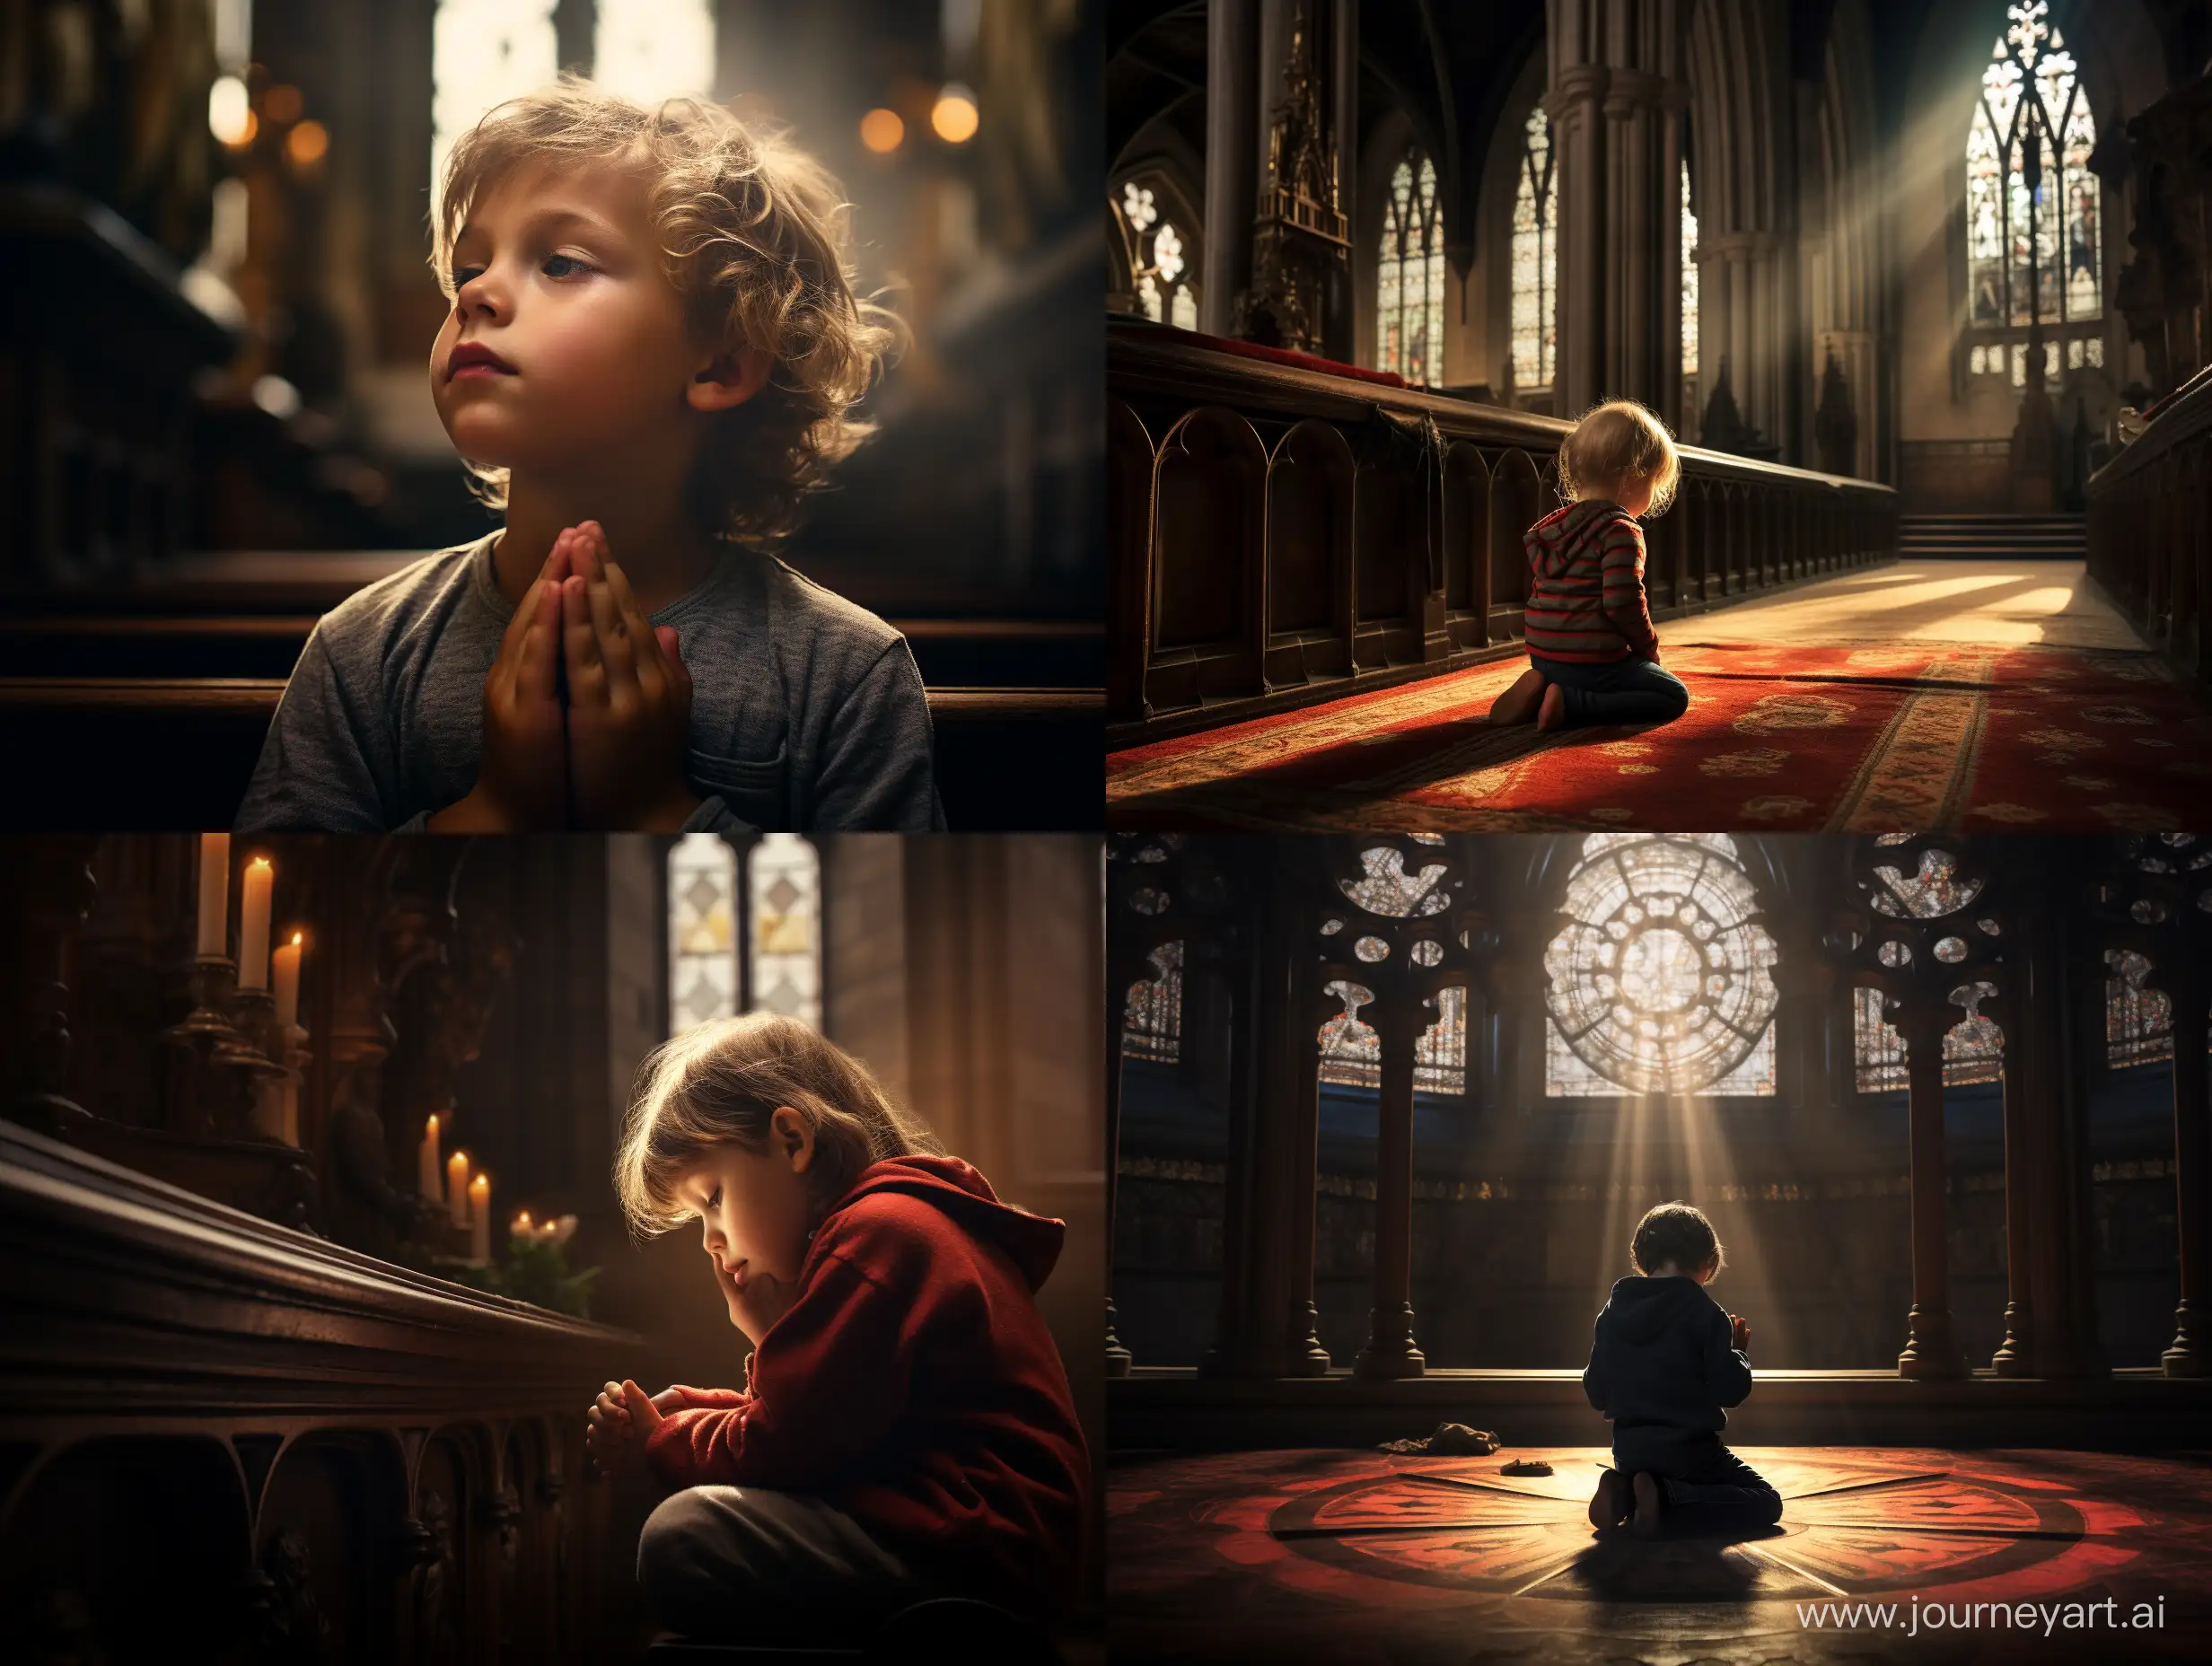 a child praying in a church